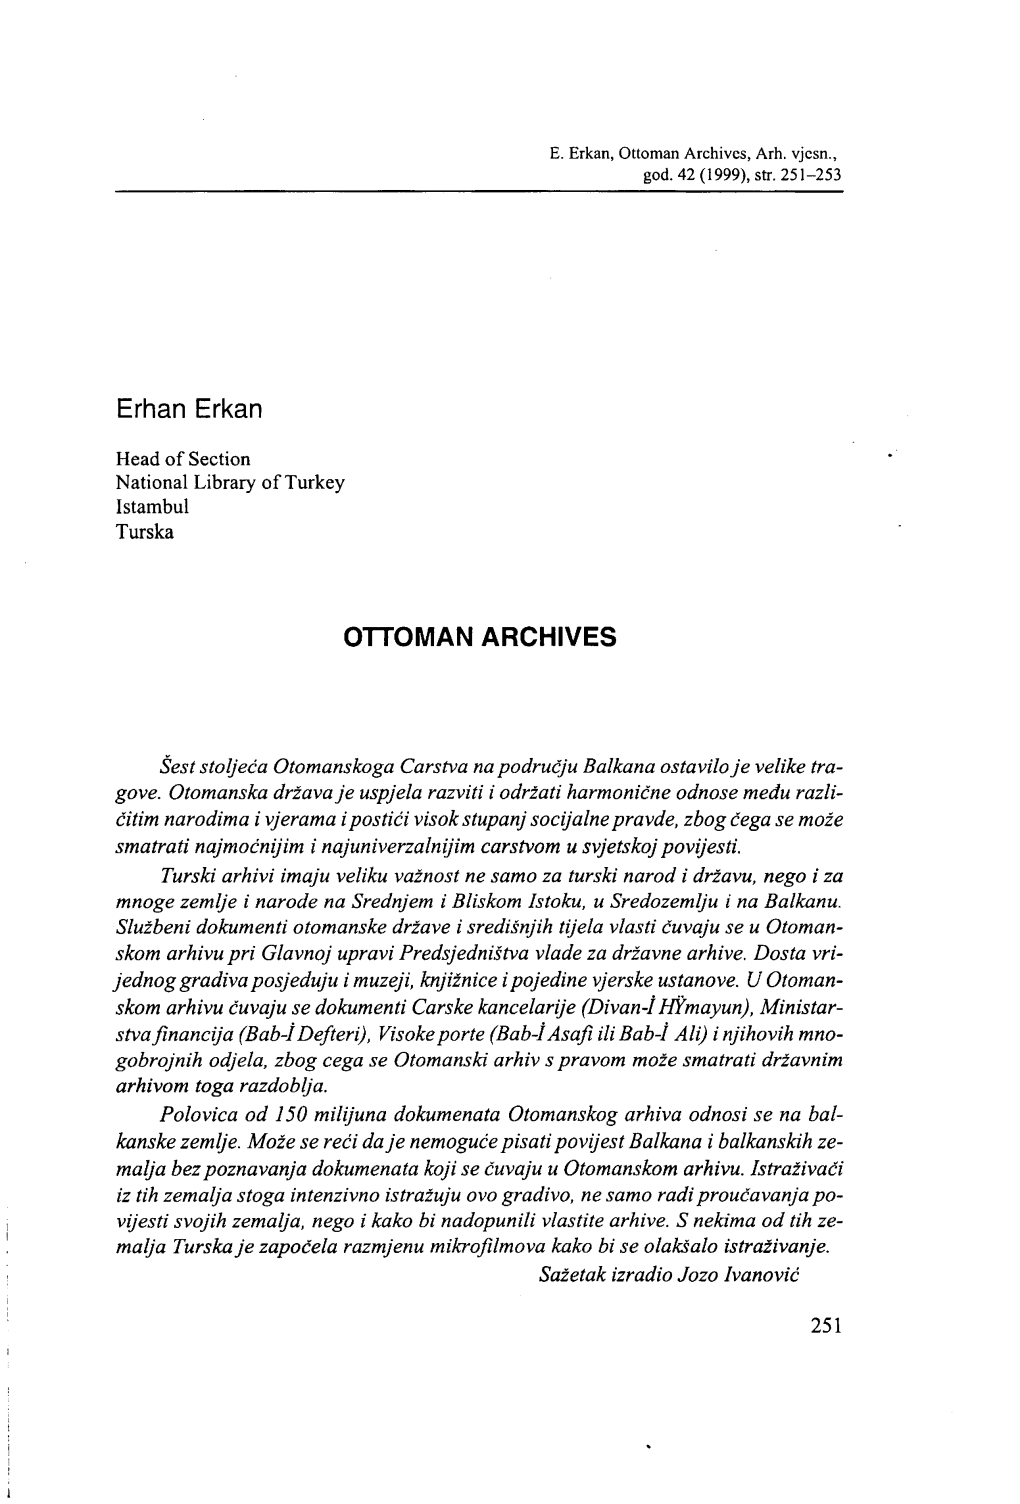 Erhan Erkan OTTOMAN ARCHIVES